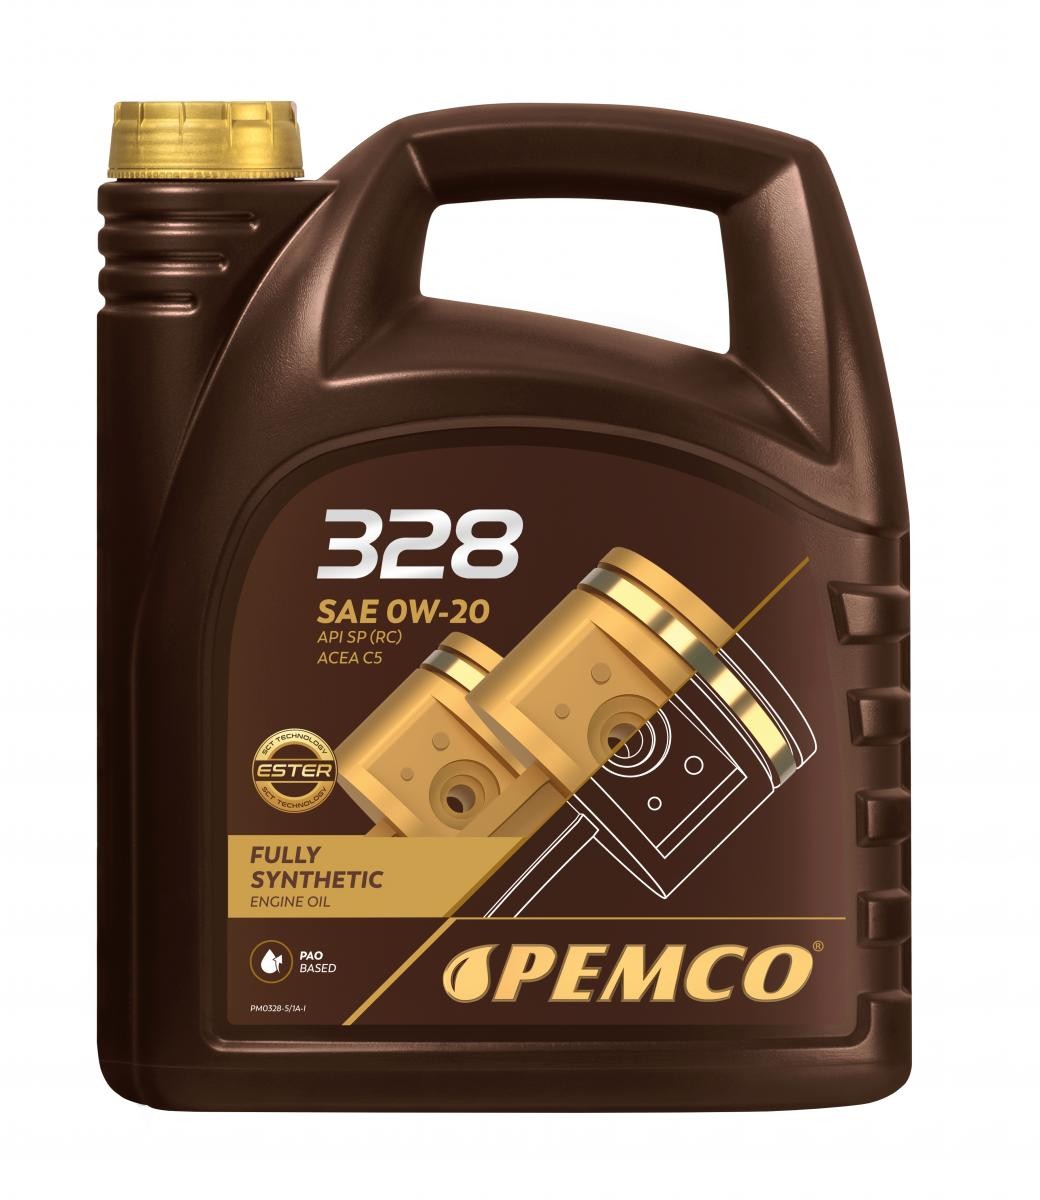 Engine oil dexos1 gen2 PEMCO - PM0328-5 328